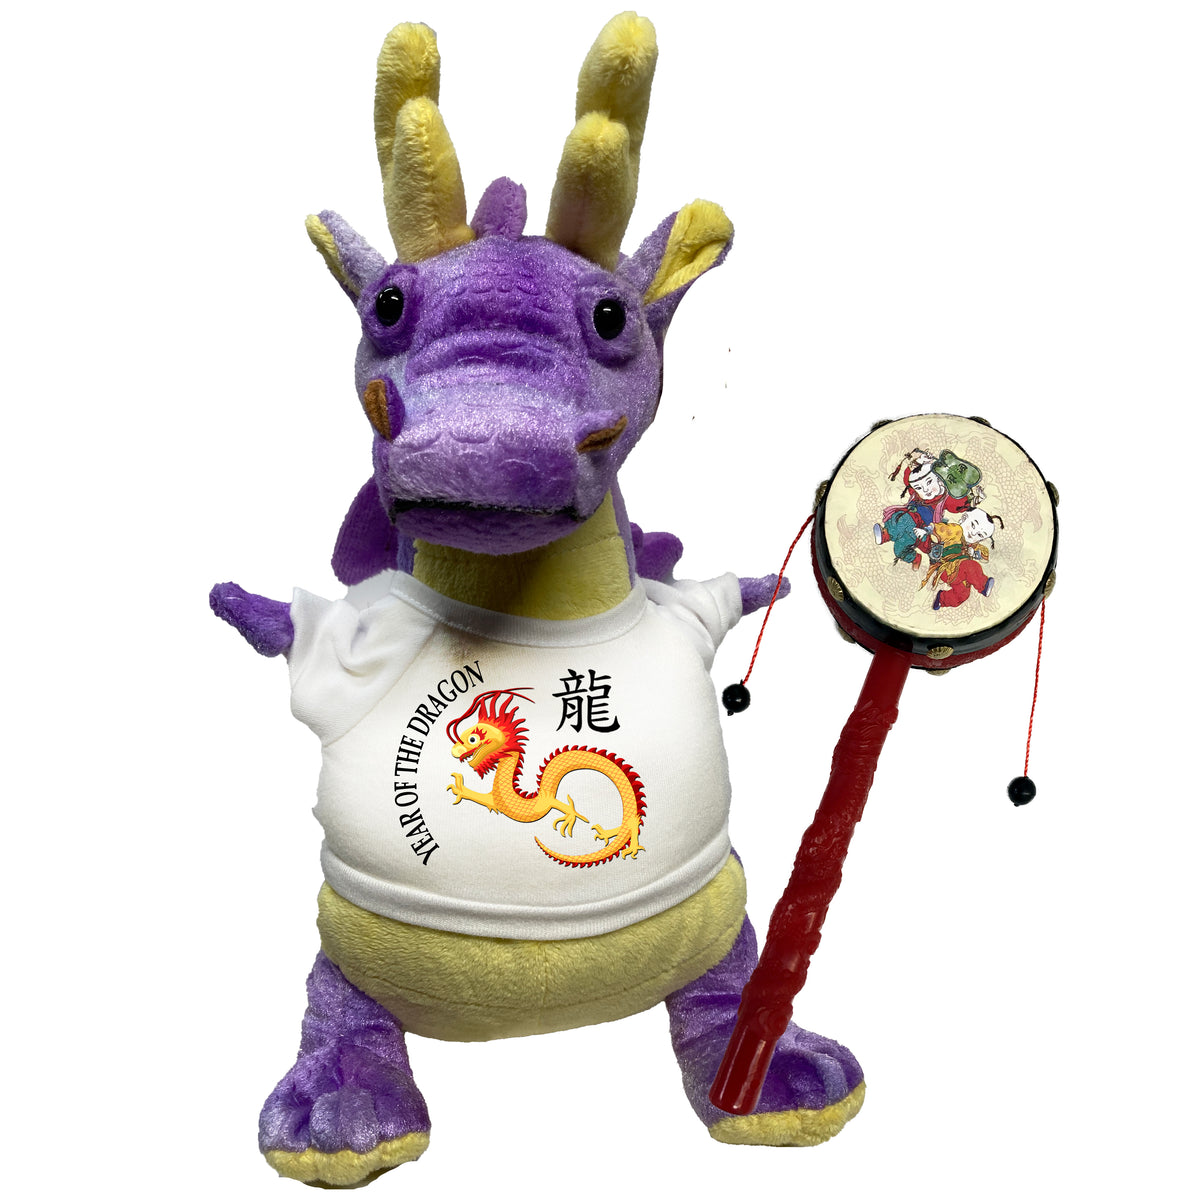 Year of the Dragon  Chinese Zodiac Stuffed Animal - Small 11" Purple Dragon with mini drum noisemaker